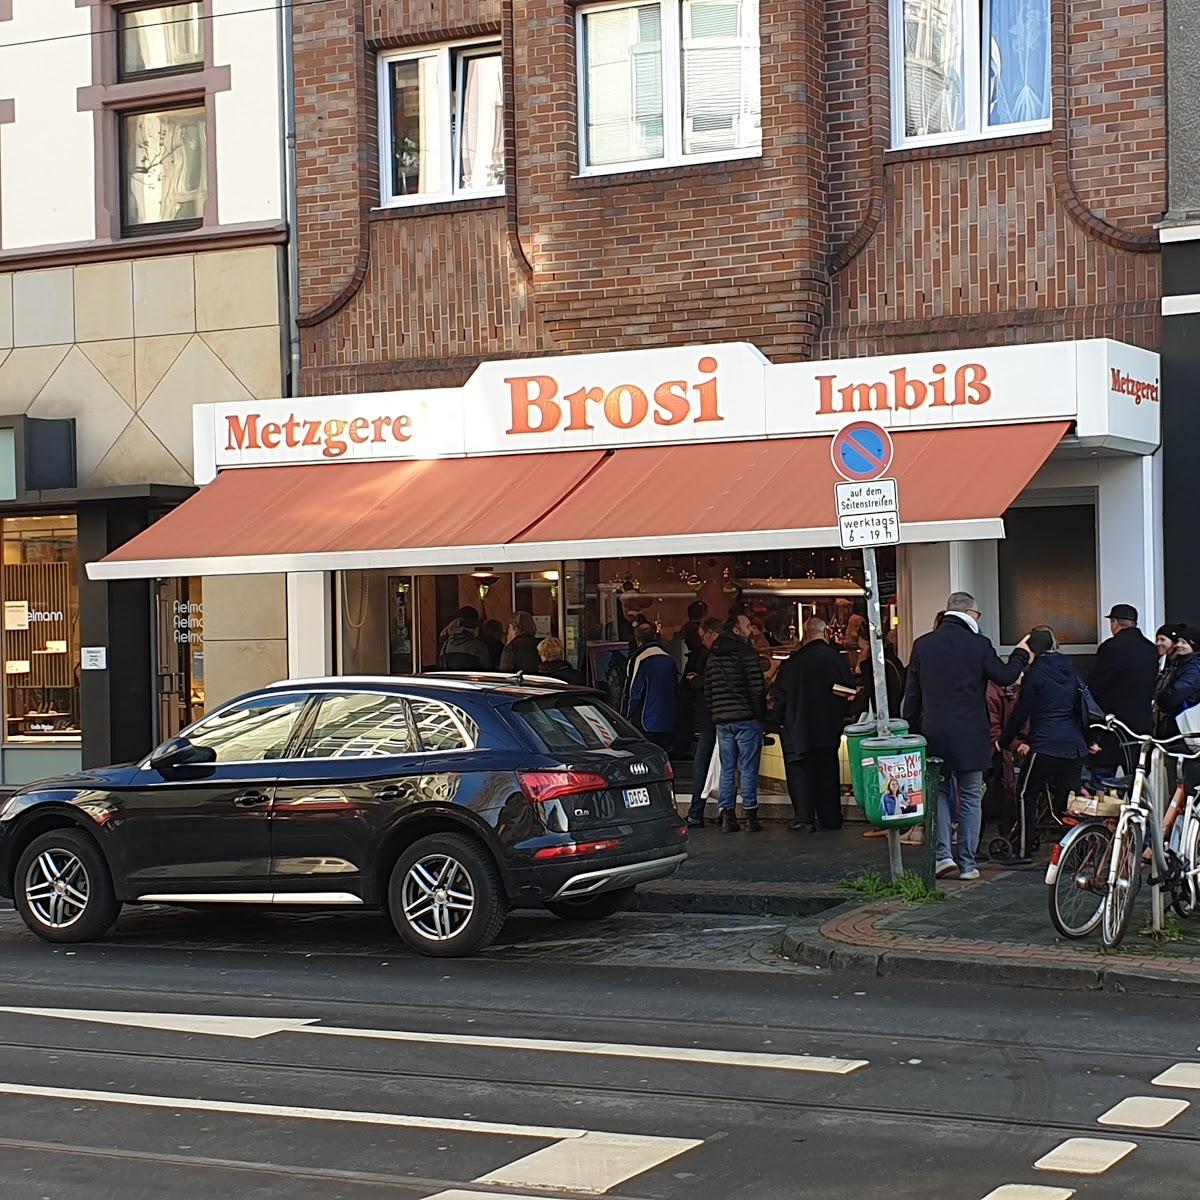 Restaurant "Metzgerei Brosi" in Düsseldorf